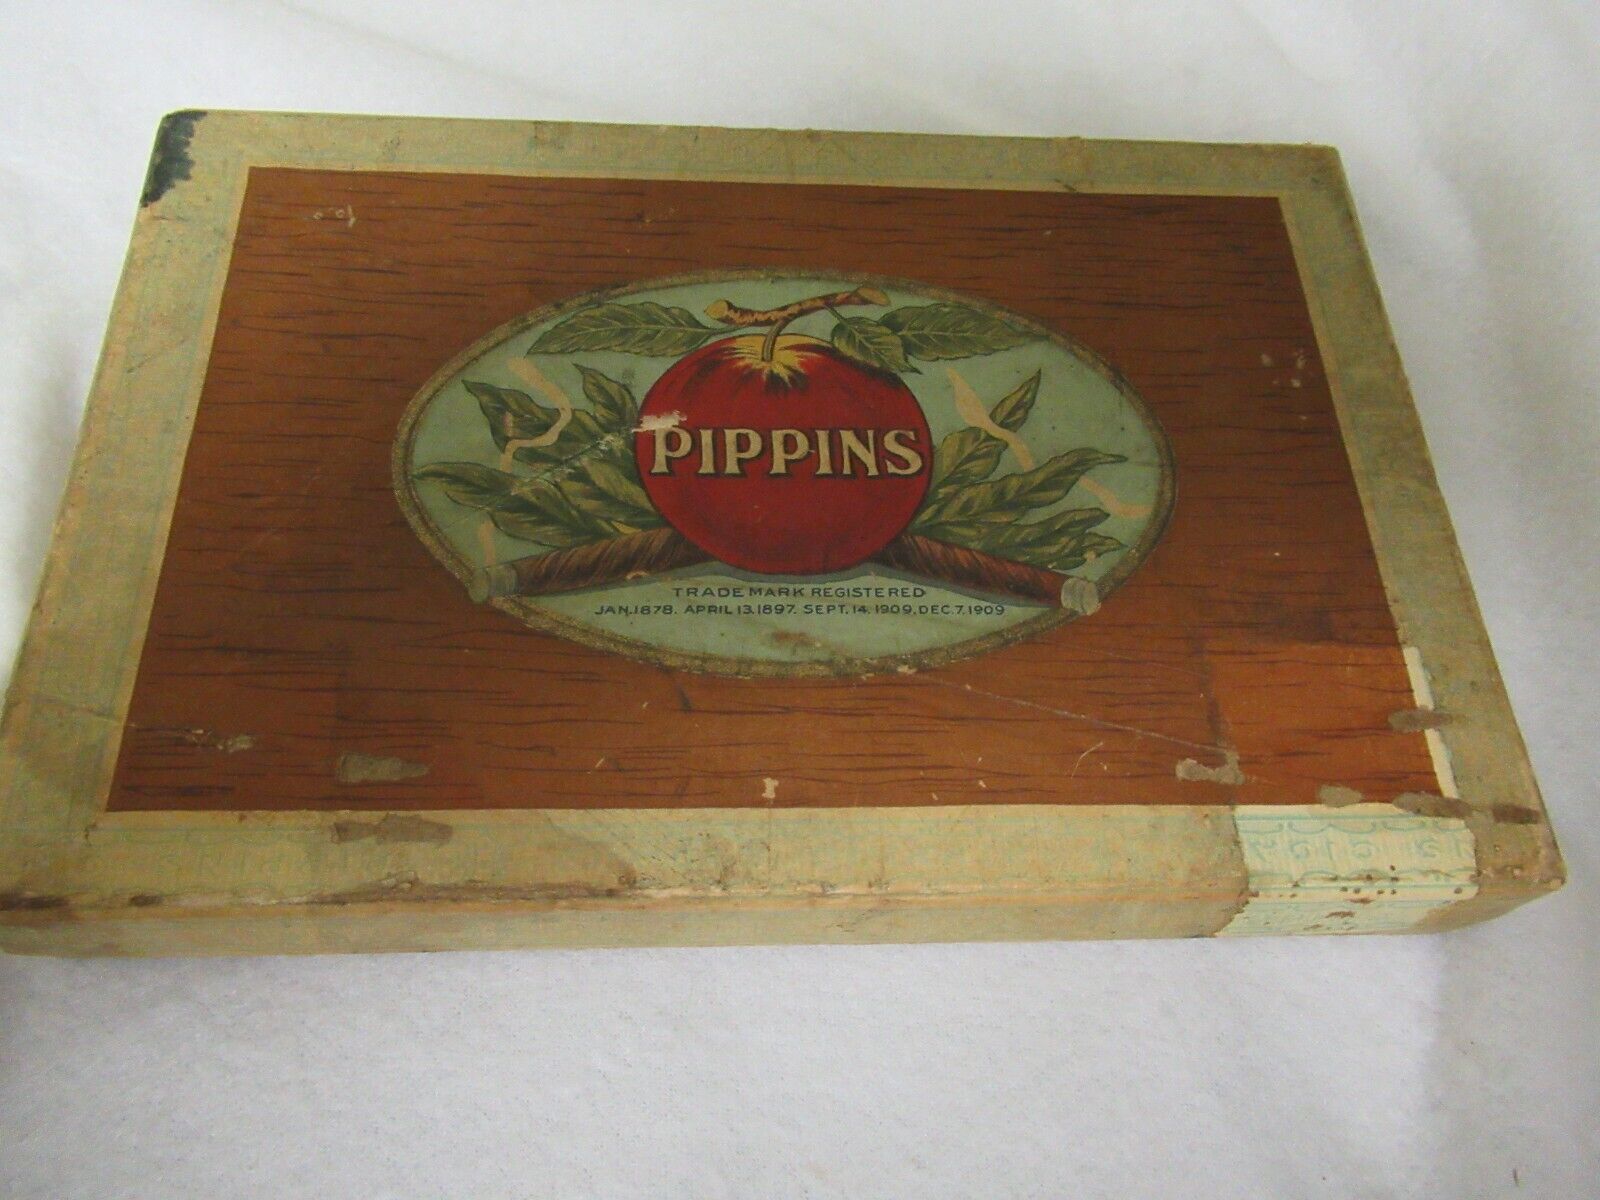 Vintage Pippins Cigar Box Trademark Reg Jan 1878 - Dec 7, 1909 H Traiser Boston 